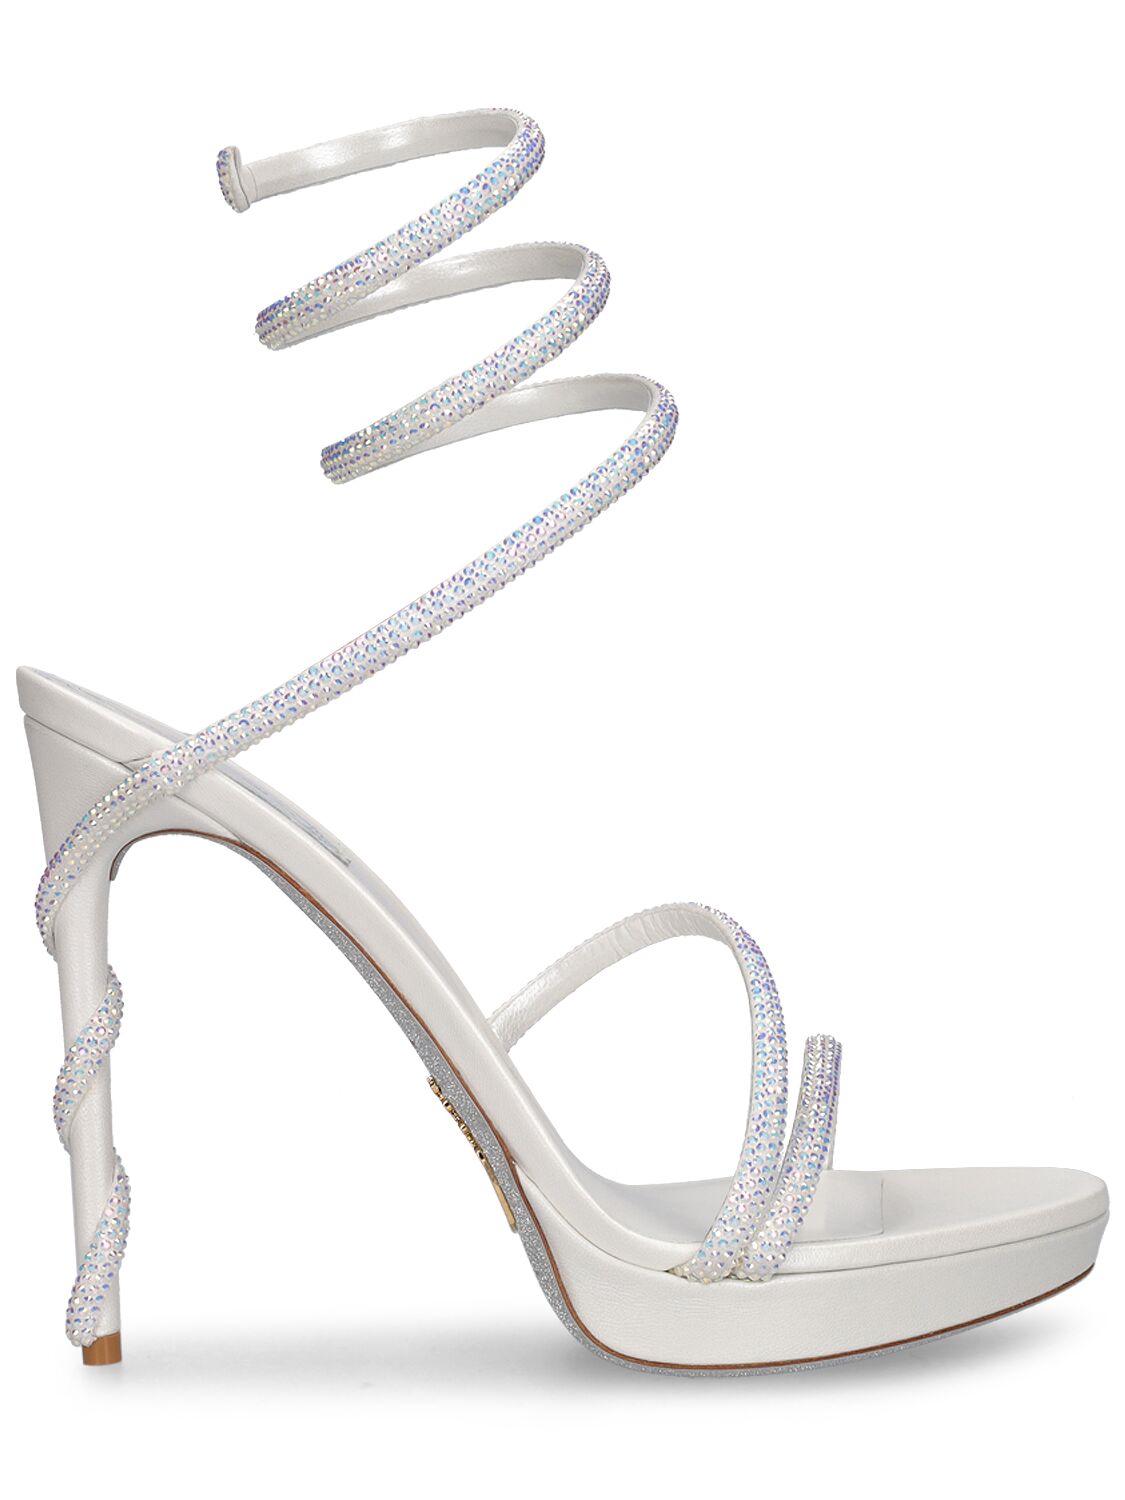 René Caovilla 120mm Margot Satin & Crystals Sandals In White